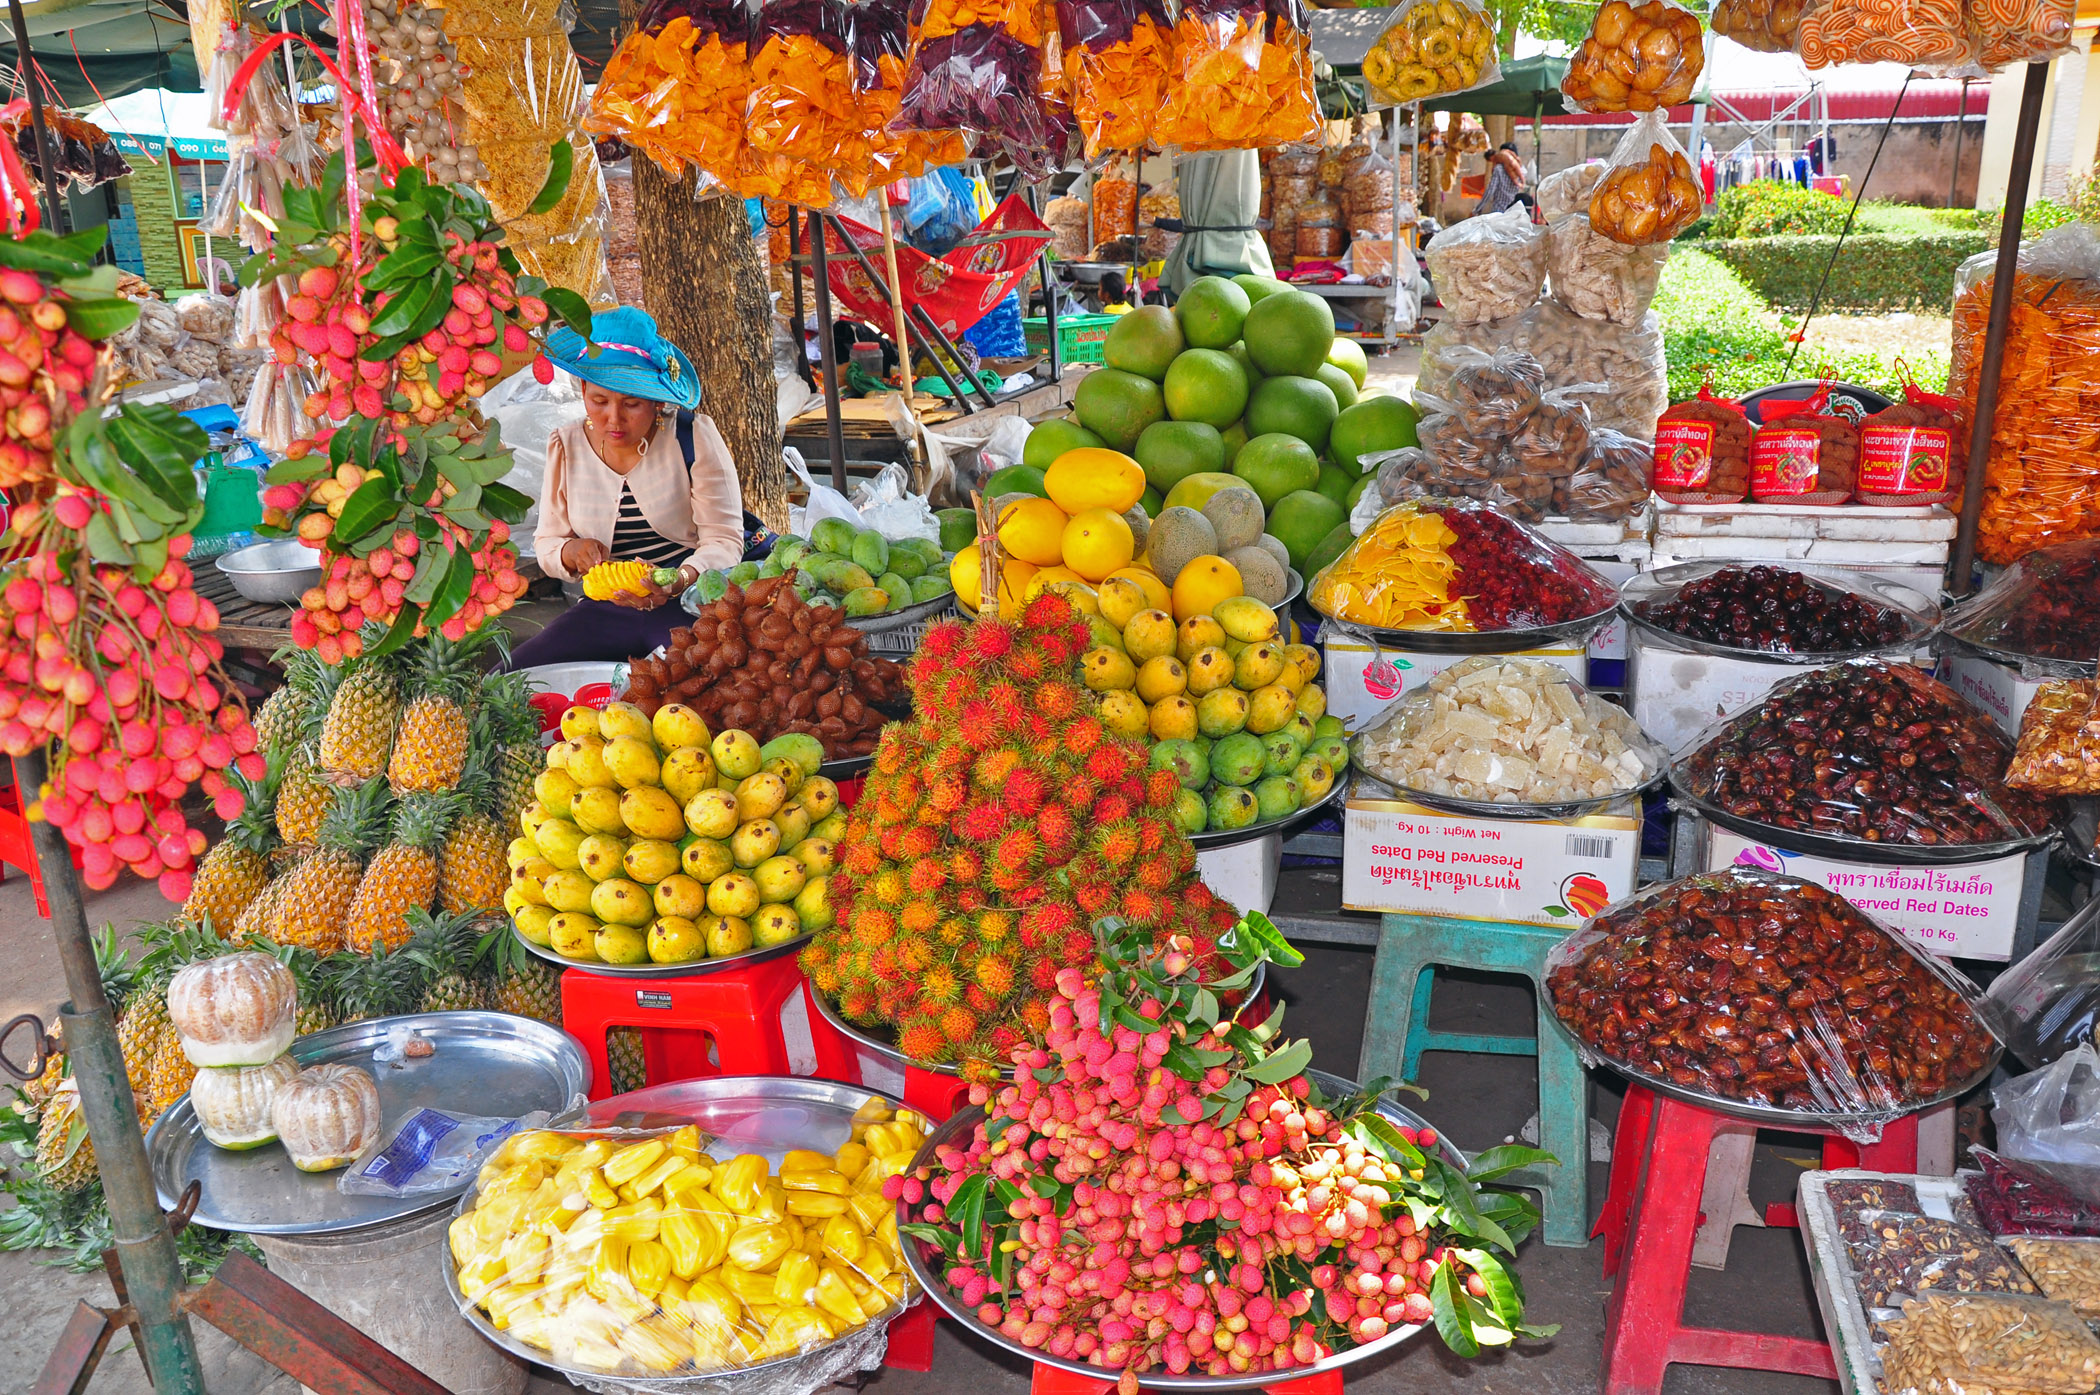 4. Market in Cambodia